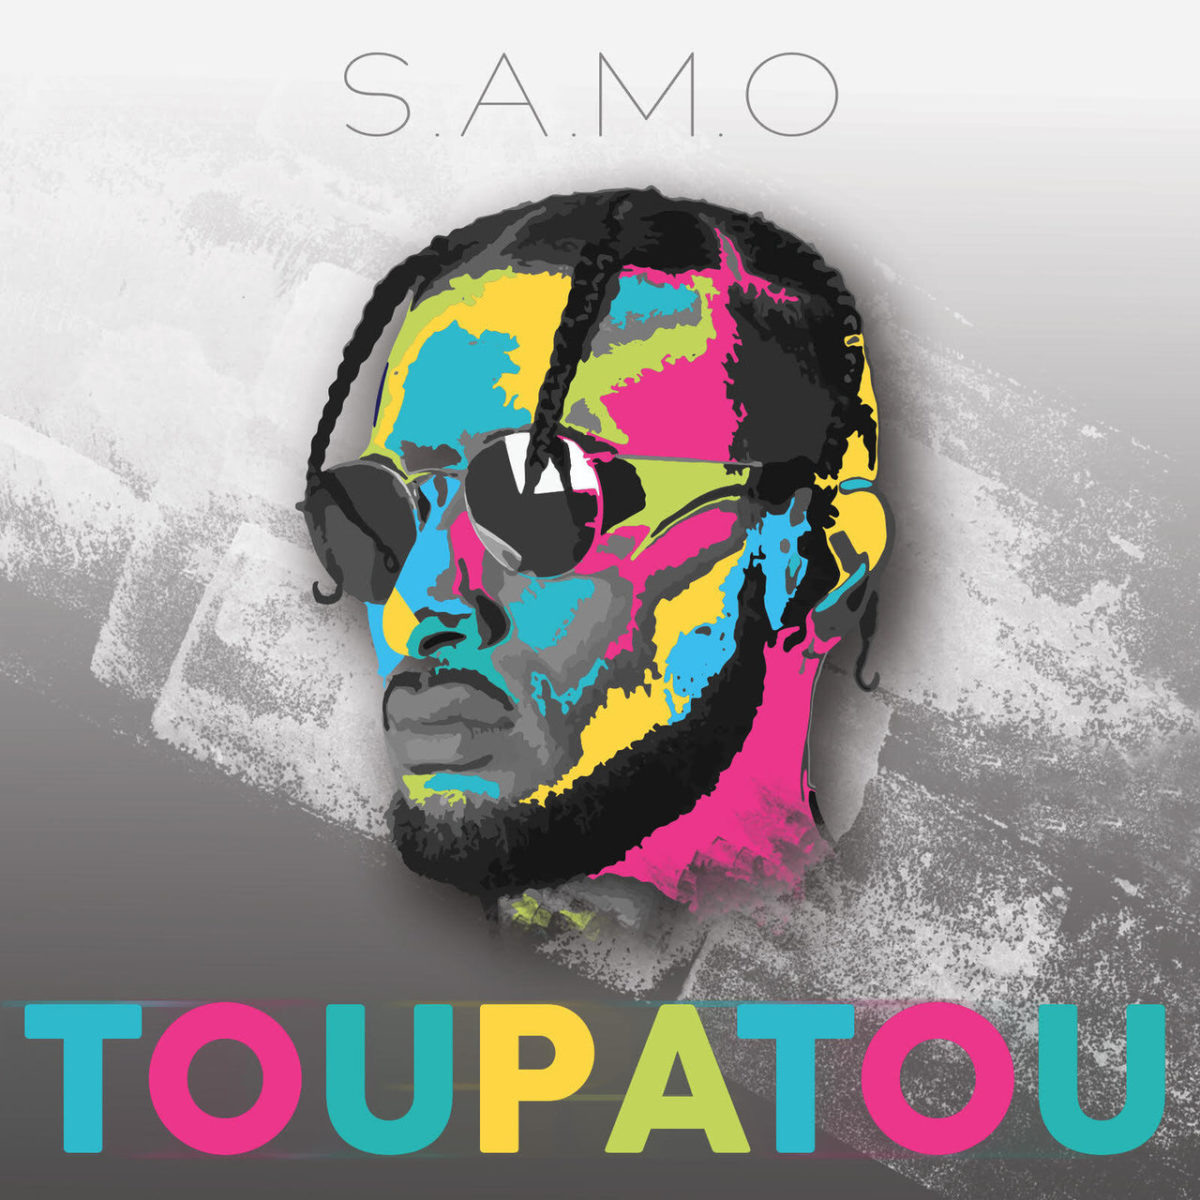 S.A.M.O - Toupatou (Cover)